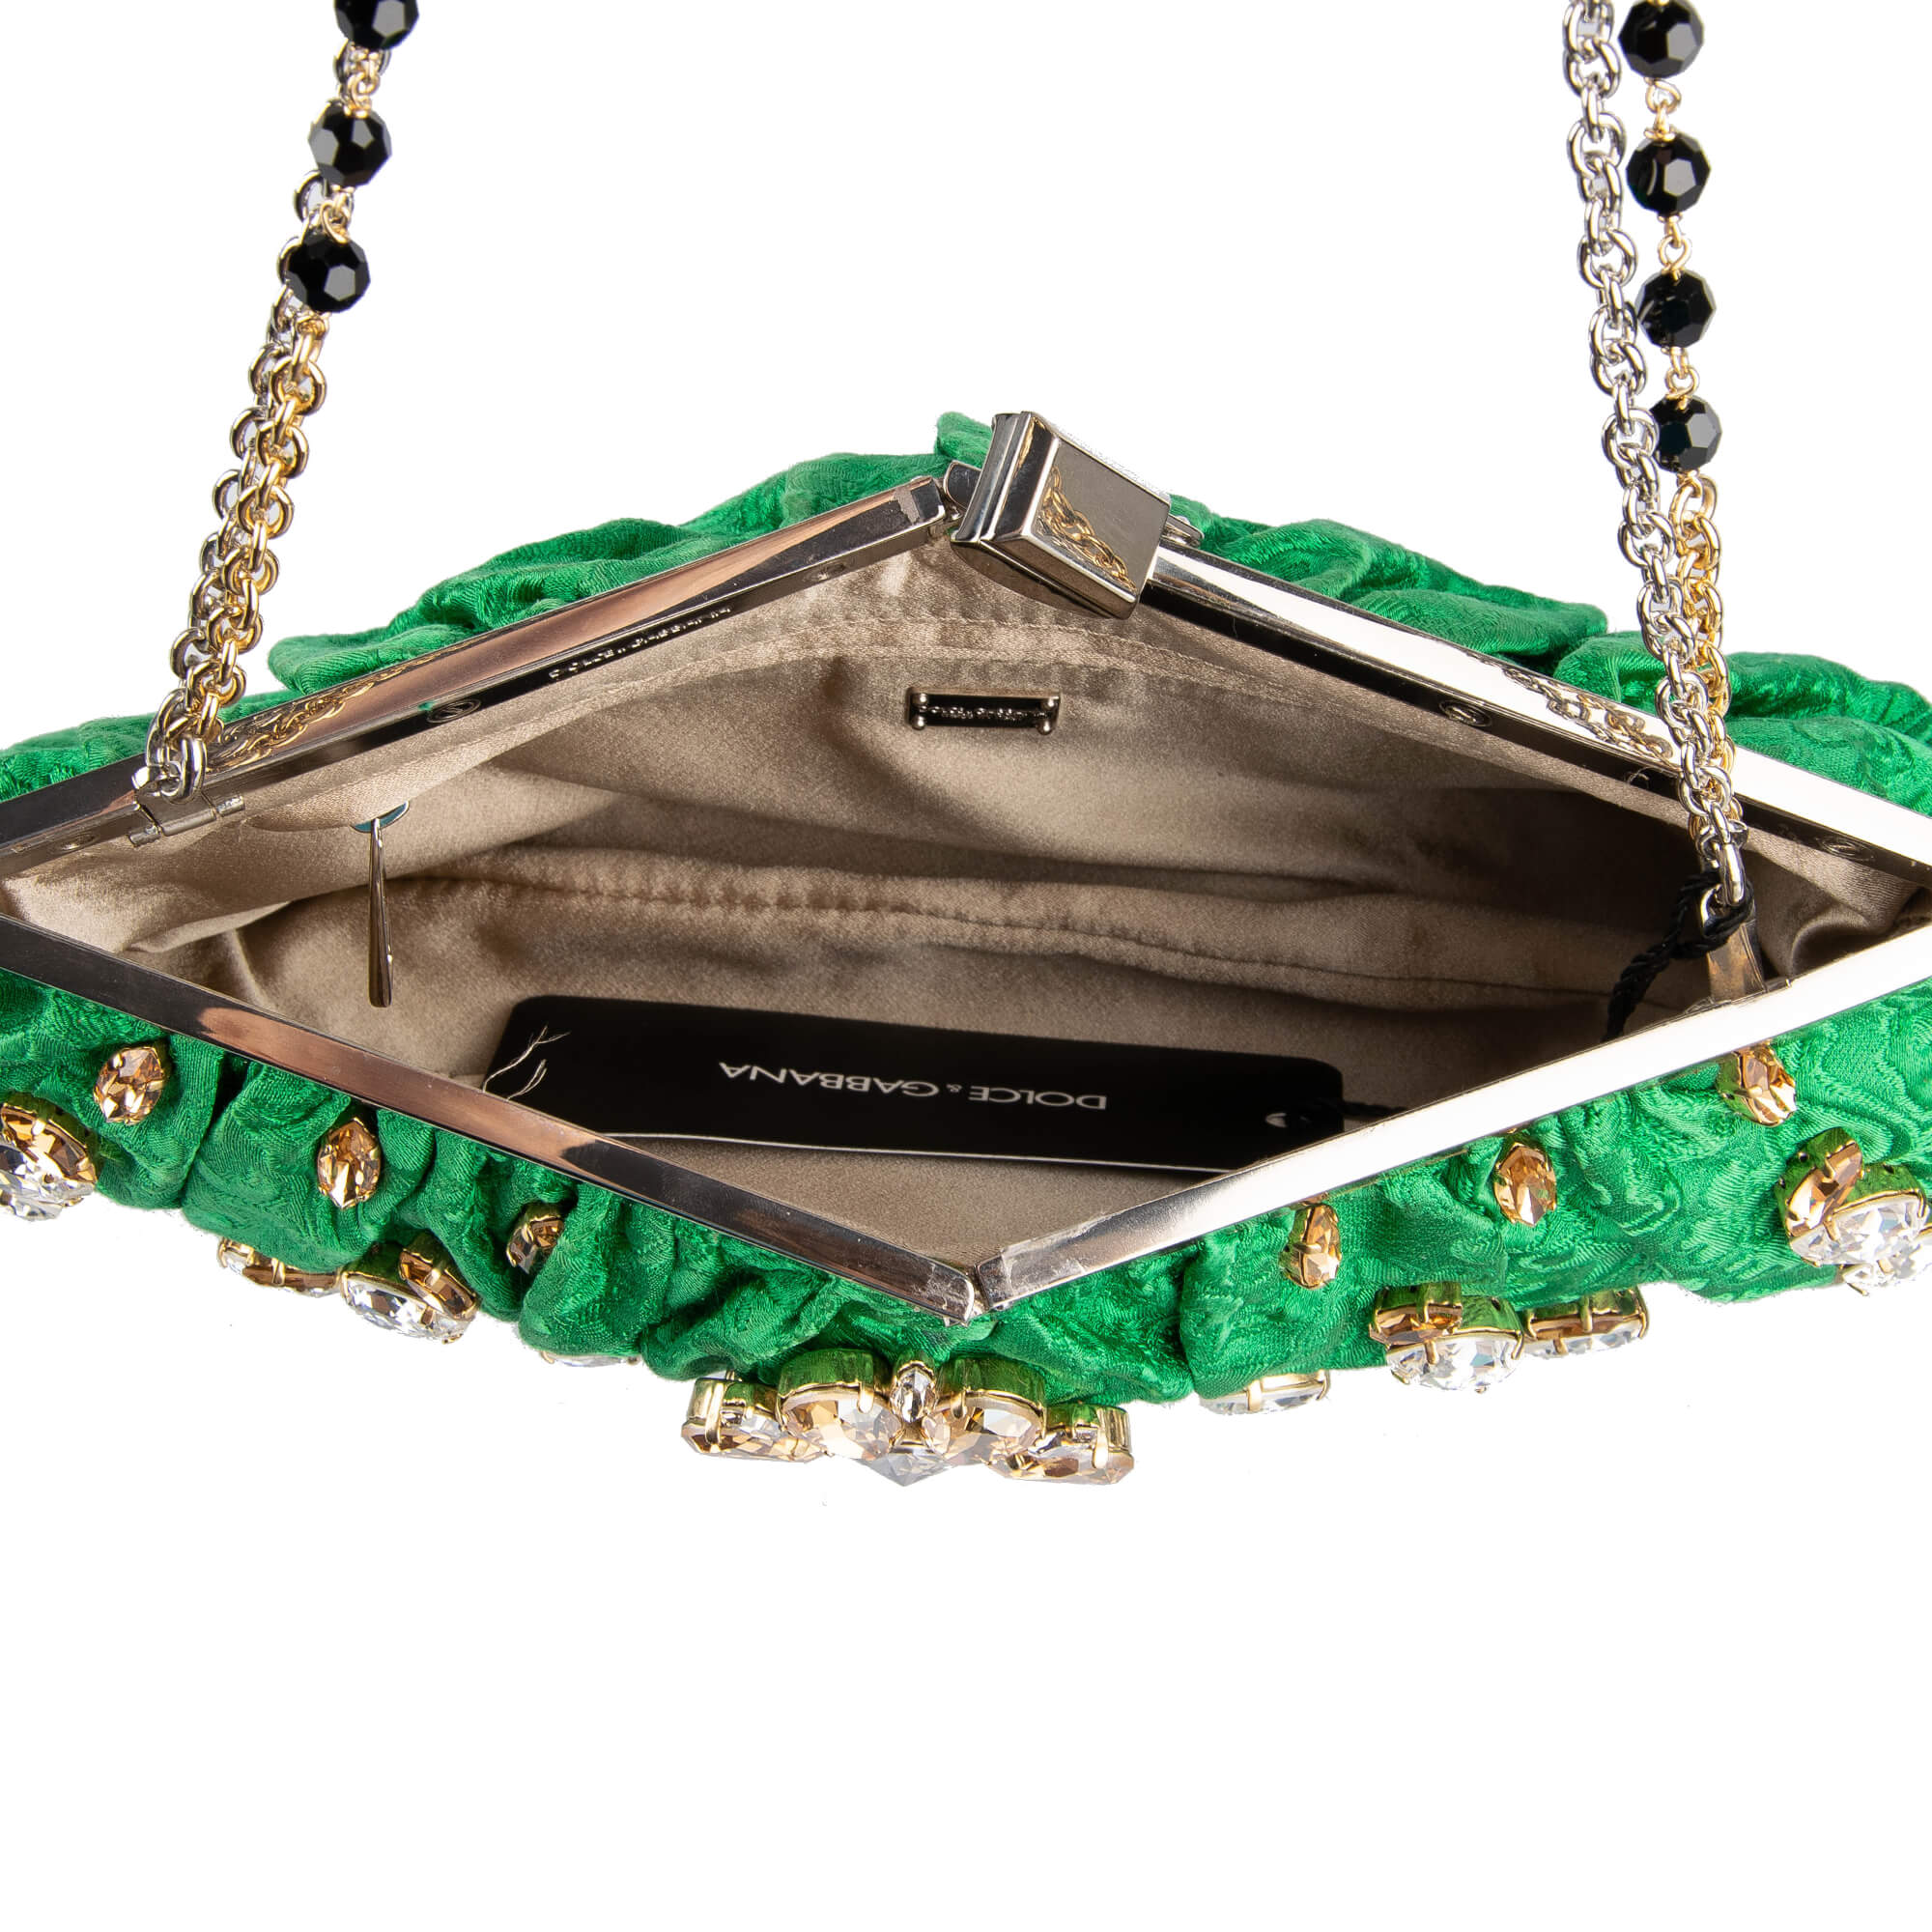 Jeweled Crystals Embellished Brocade Clutch Evening Bag Green